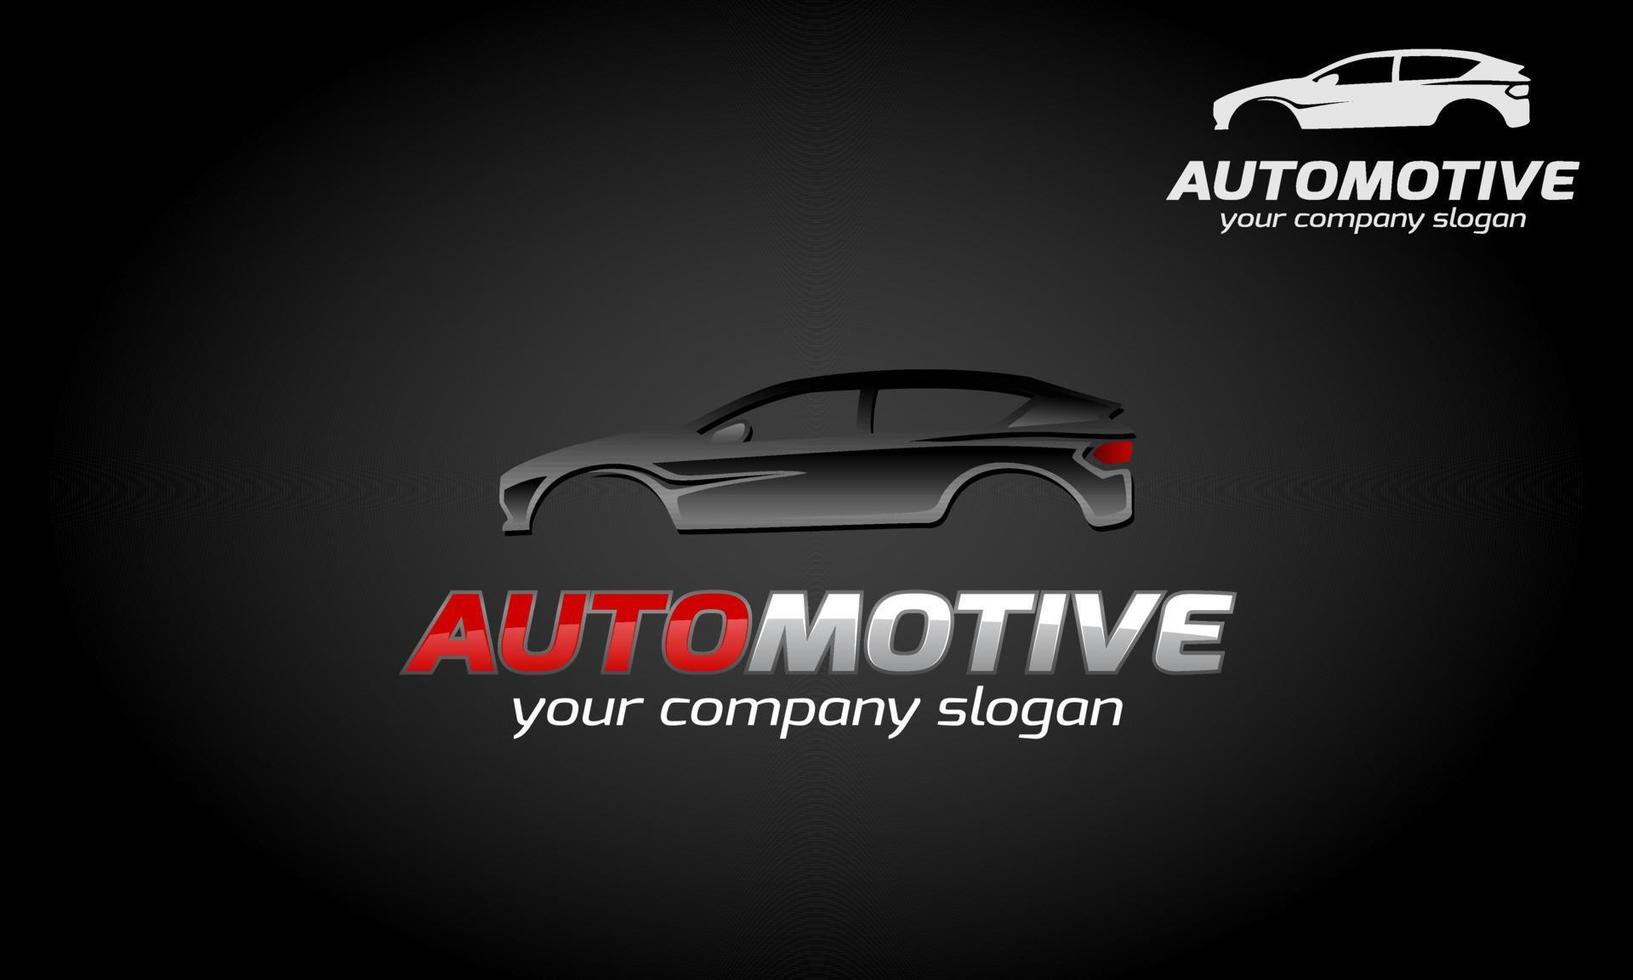 Automotive Vector Logo Template. A modern and sporty logo.